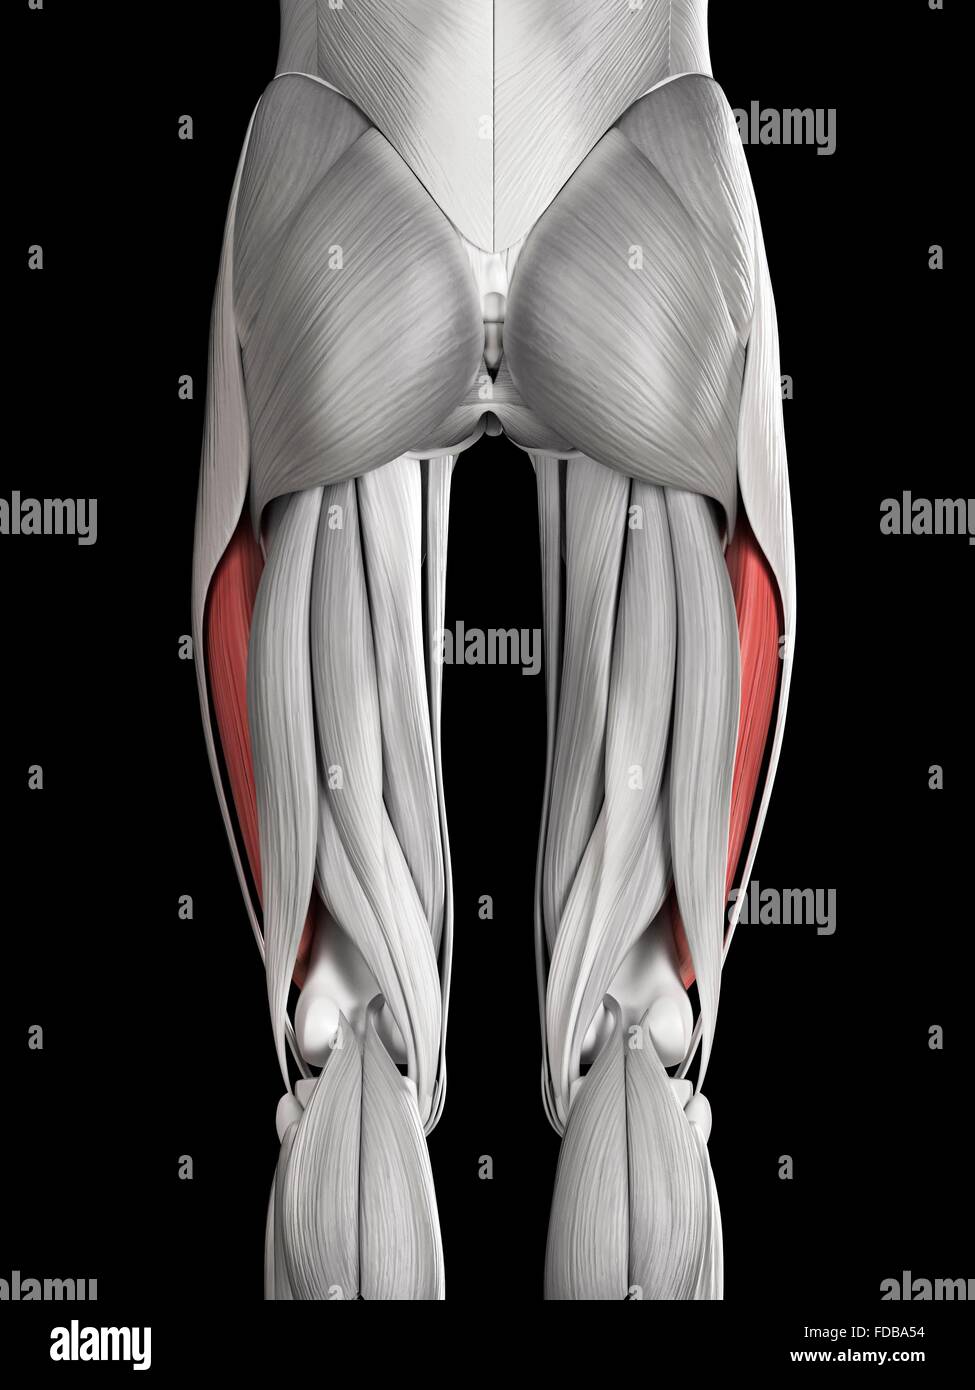 Human leg muscles (vastus lateralis), illustration Stock Photo - Alamy